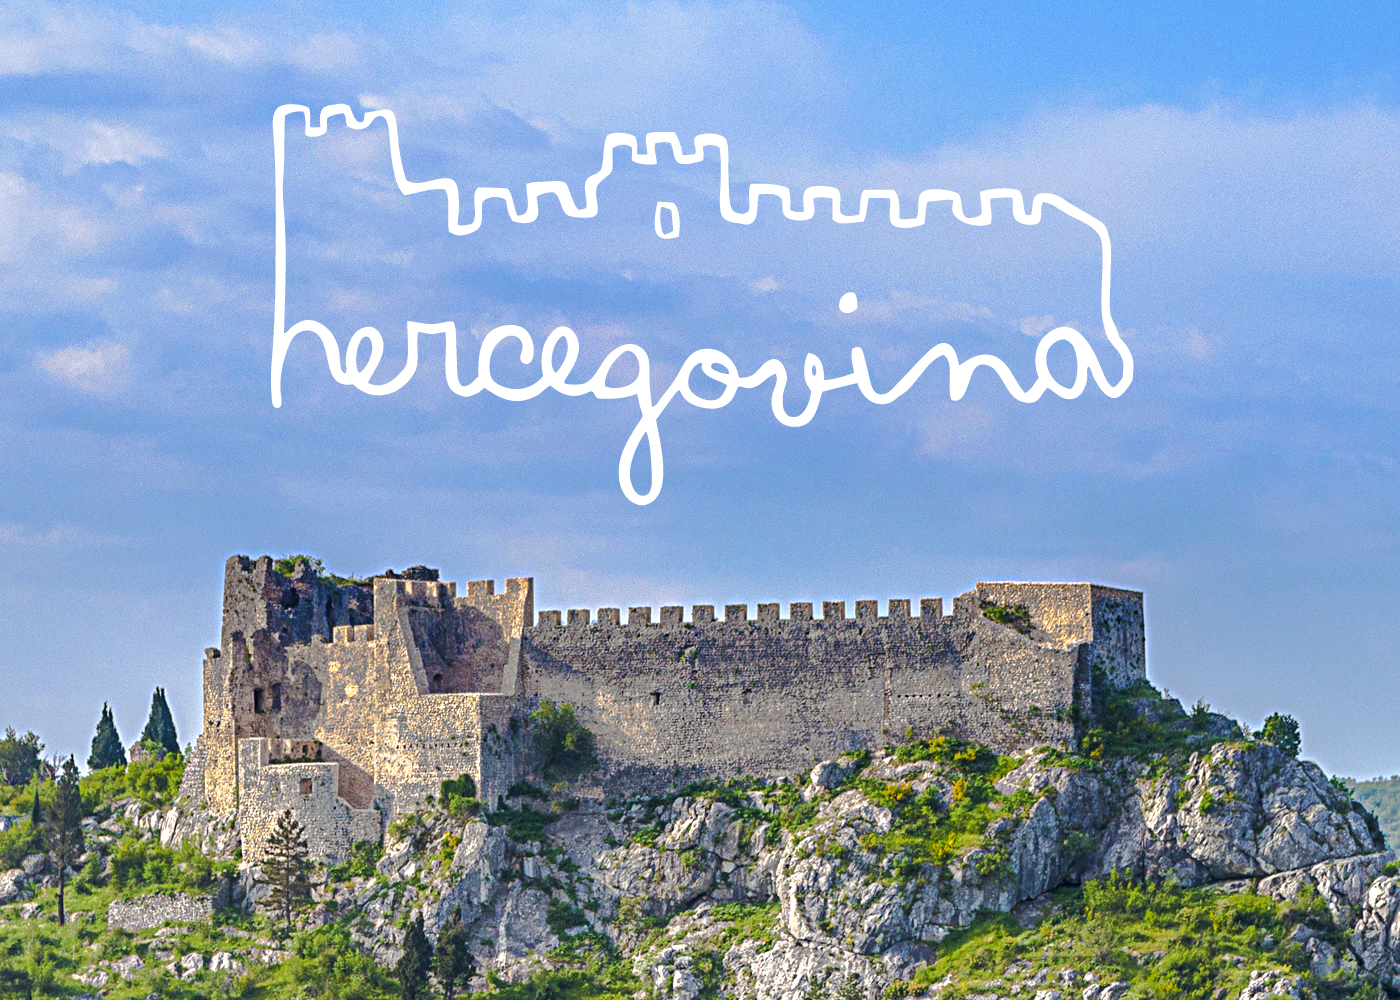 Vizualni identitet turističkoga klastera Hercegovina